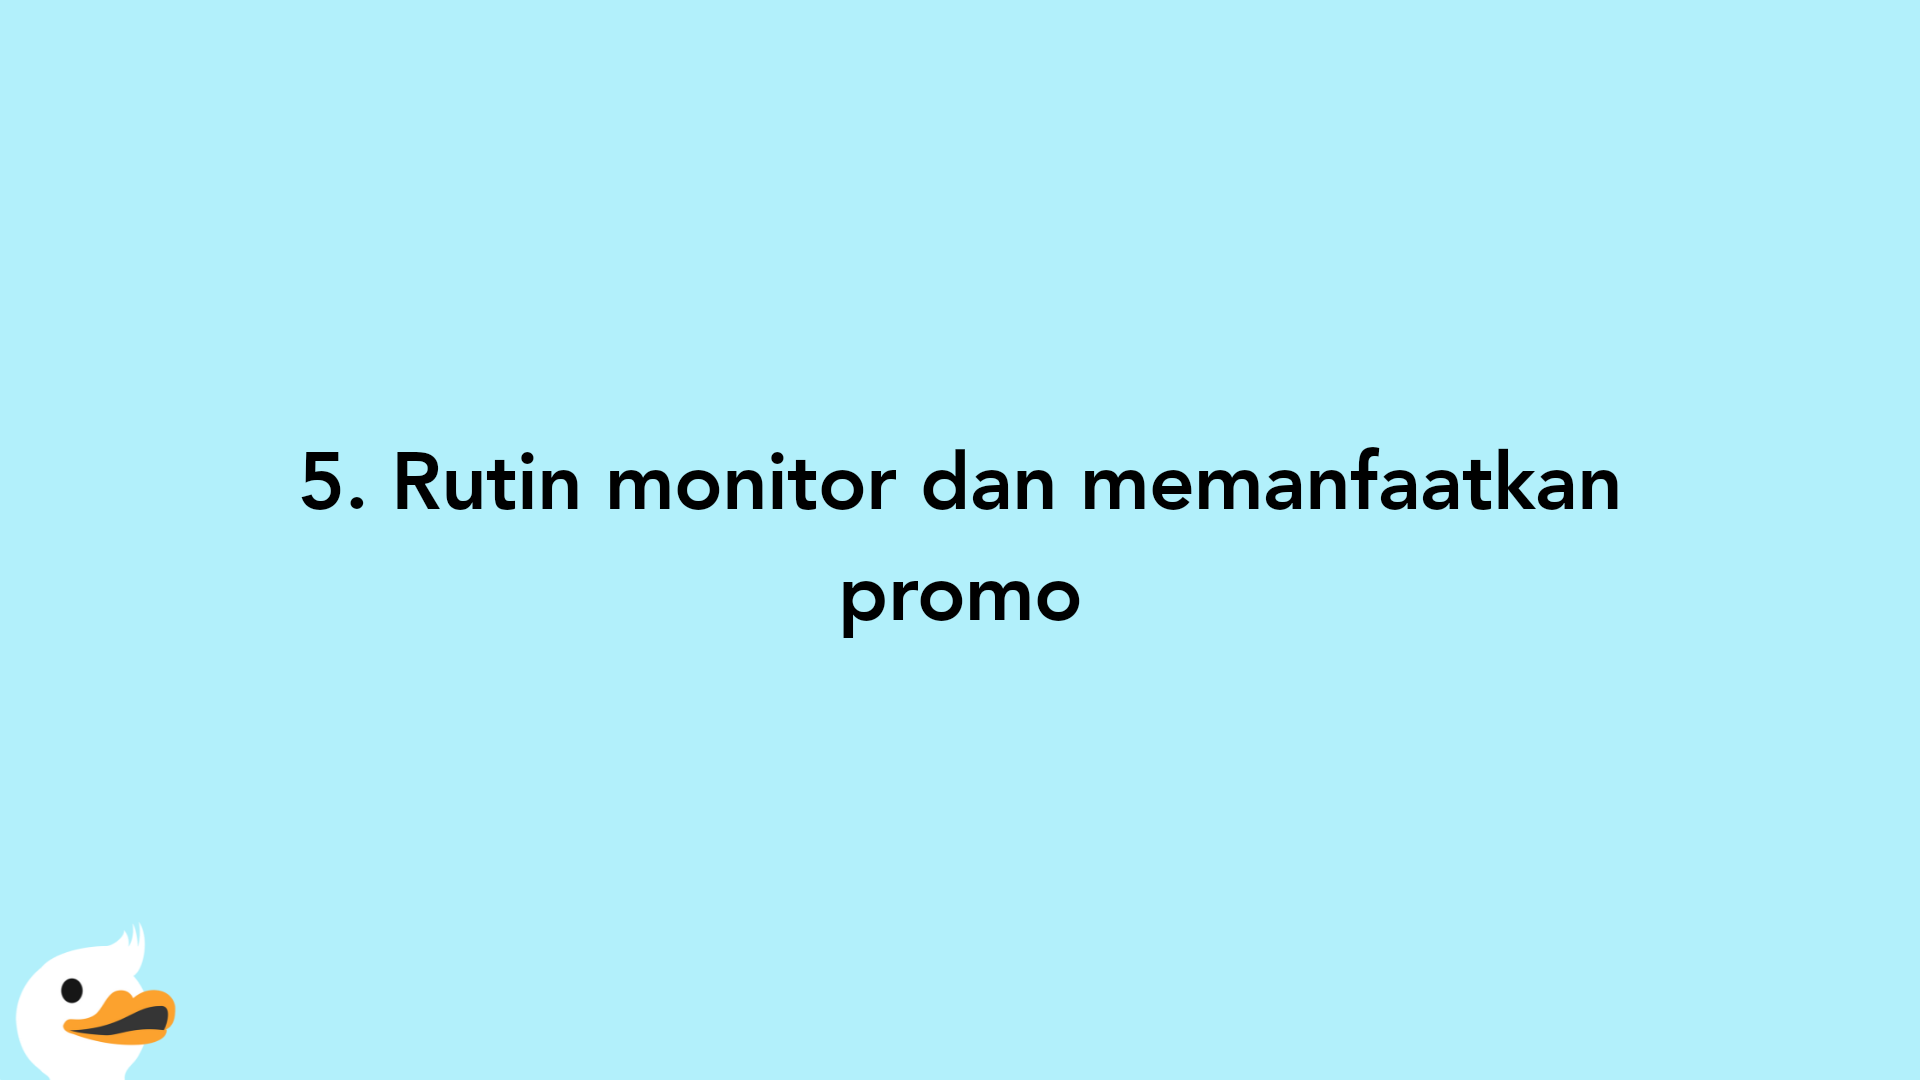 5. Rutin monitor dan memanfaatkan promo